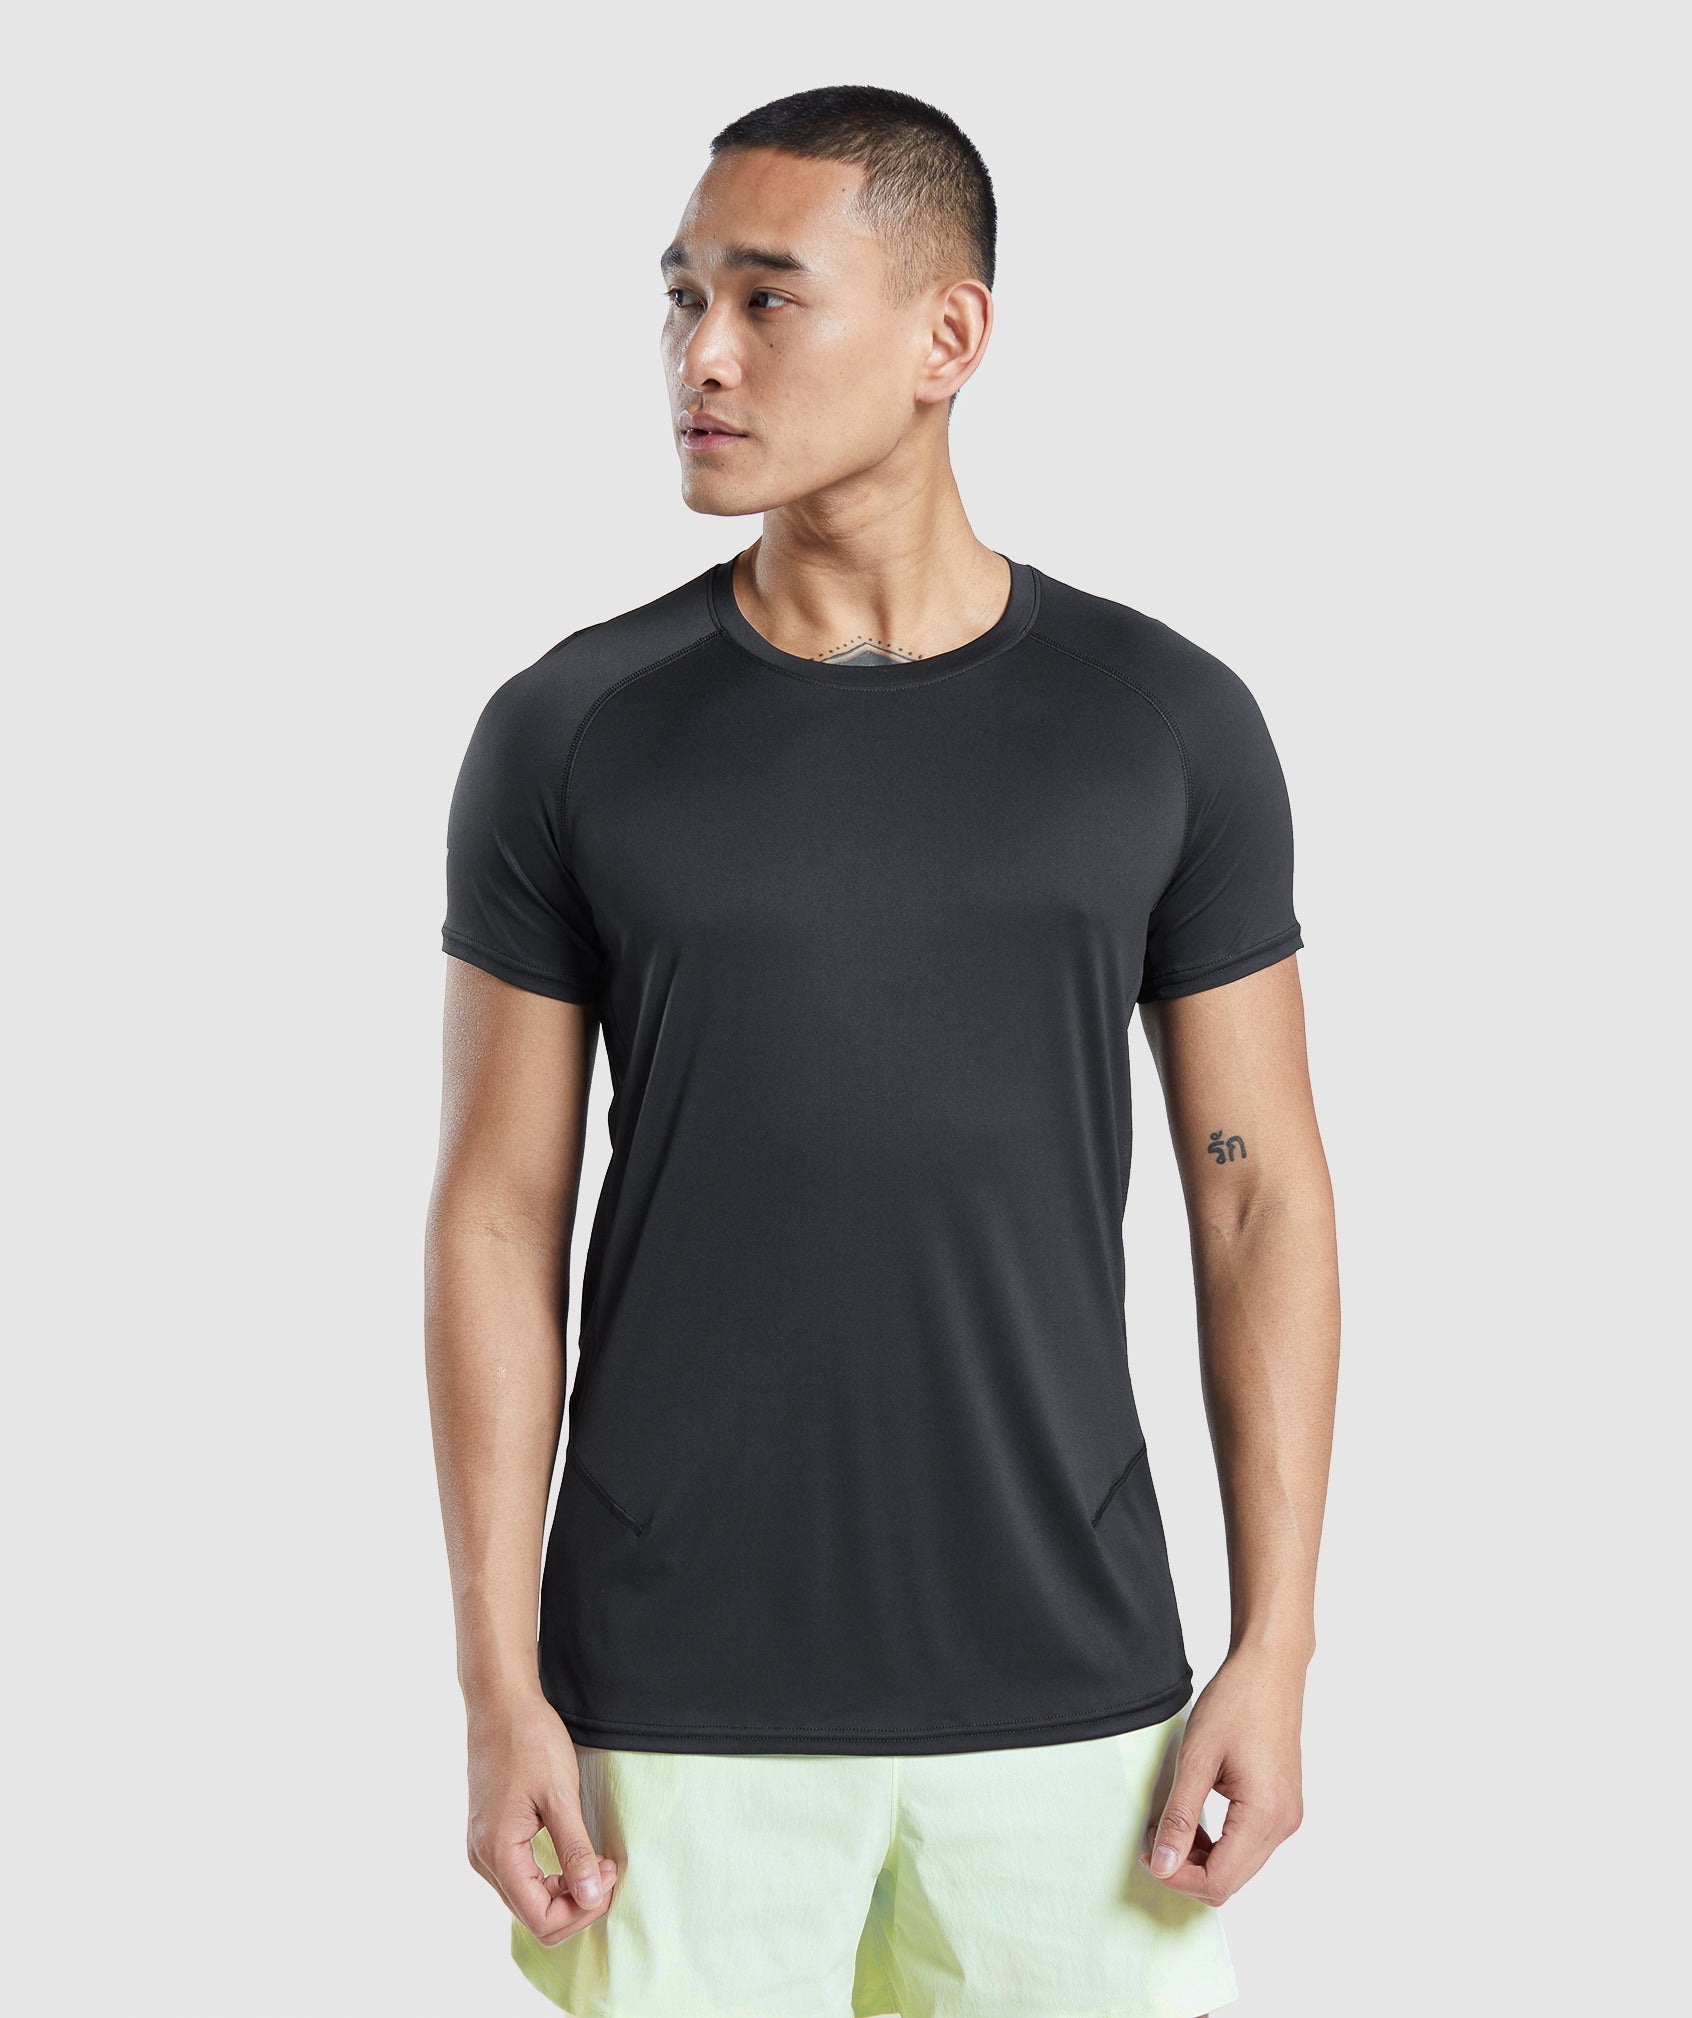 Gymshark [Variation] Men's Speed Crew Short Sleeve T-Shirt, Black